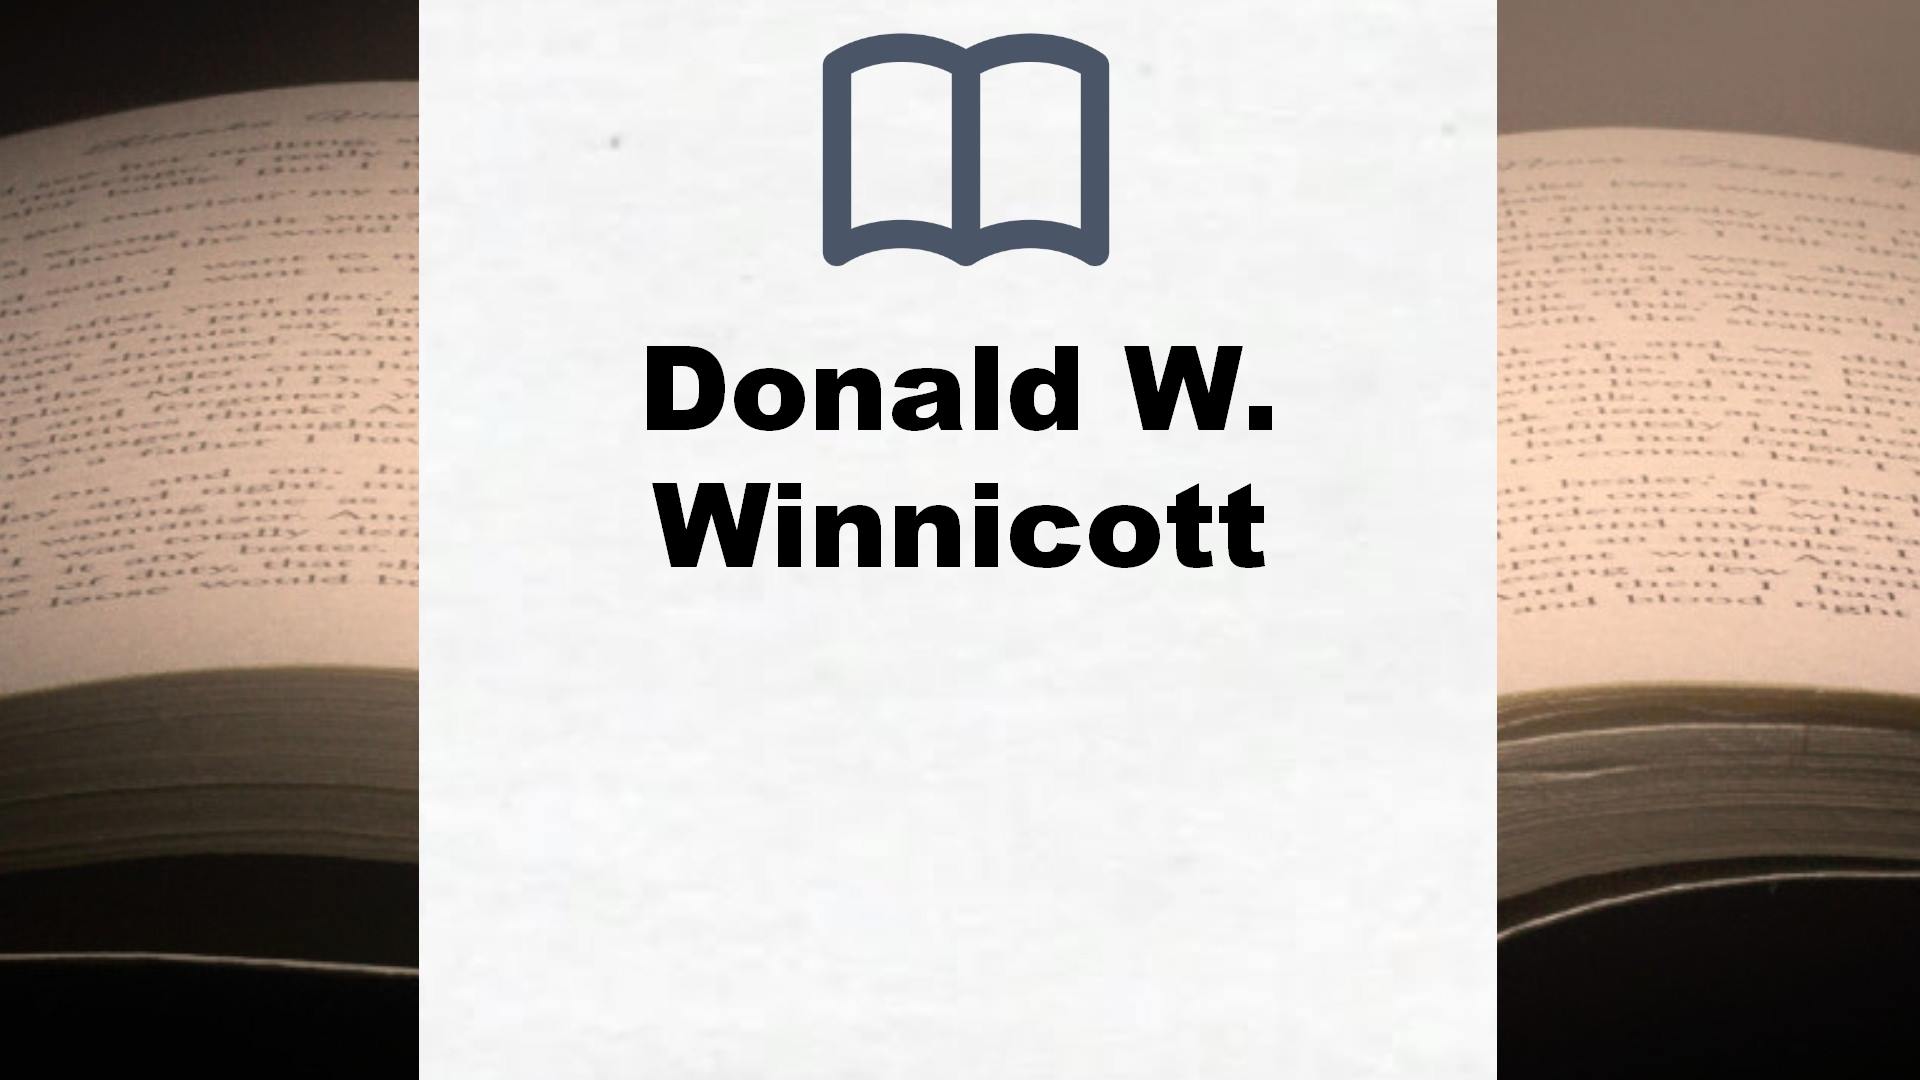 Libros Donald W. Winnicott